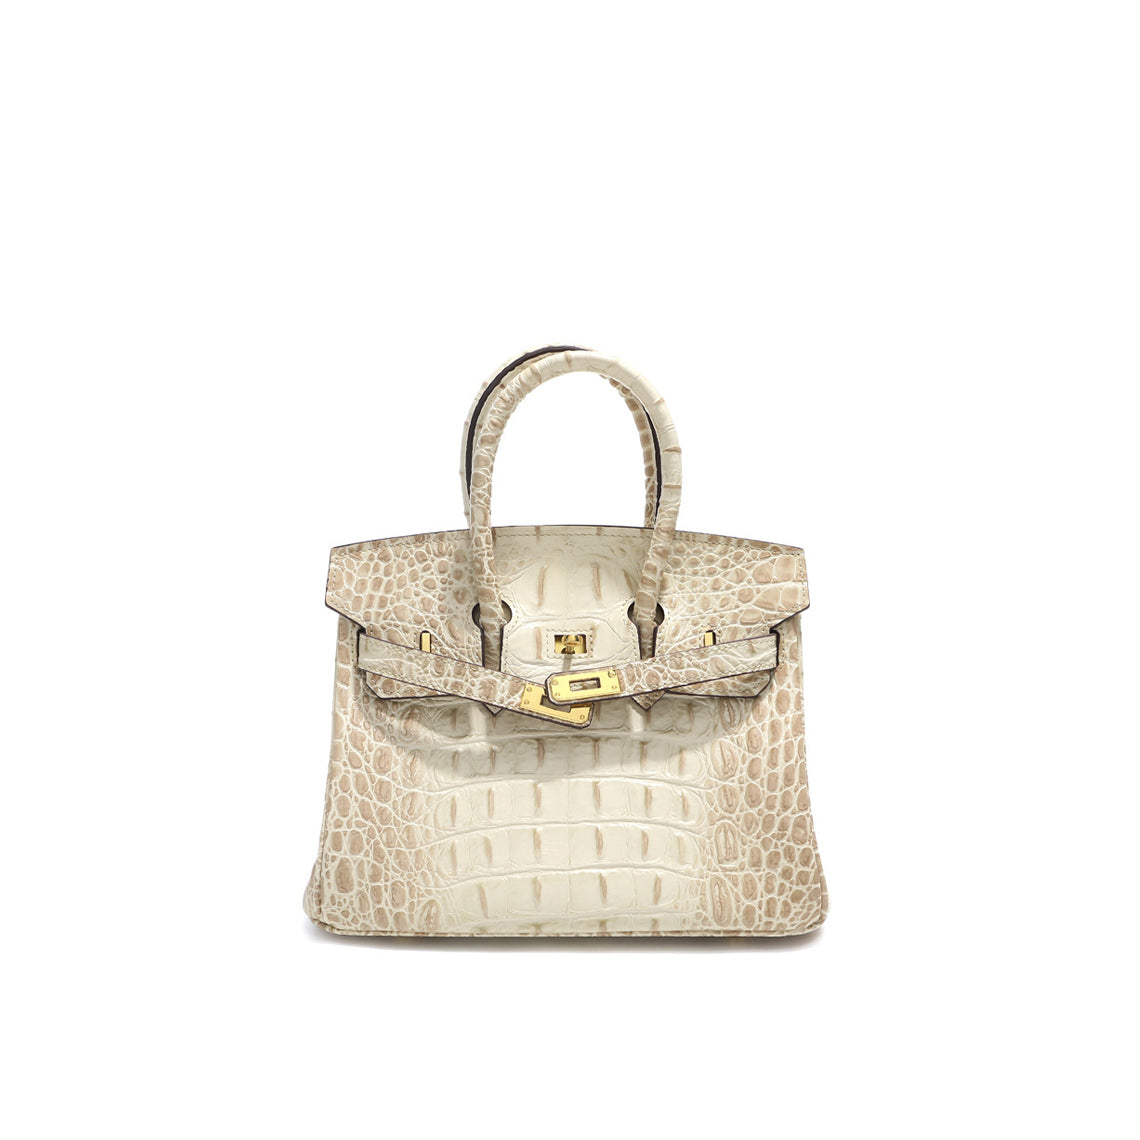 Beige Crocodile Embossed Leather Bag Handbag for Women - POPSEWING™